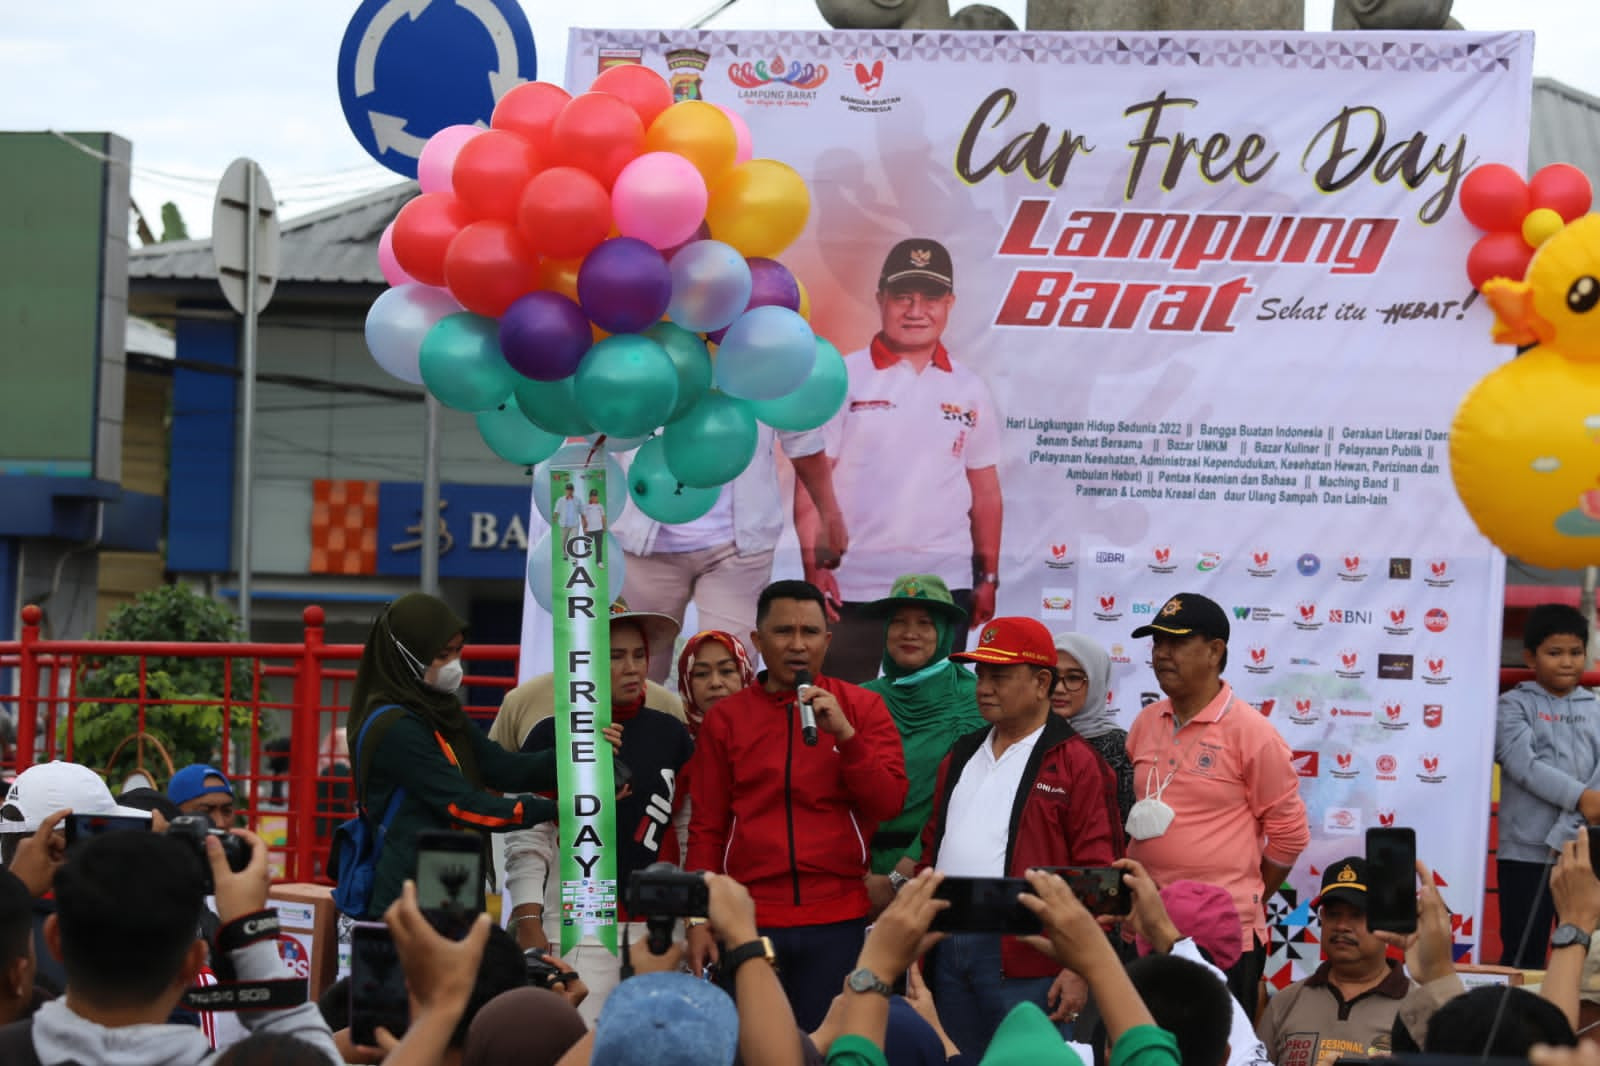 Lampung Barat Ada Car Free Day, Catat Jadwalnya - JPNN.com Lampung